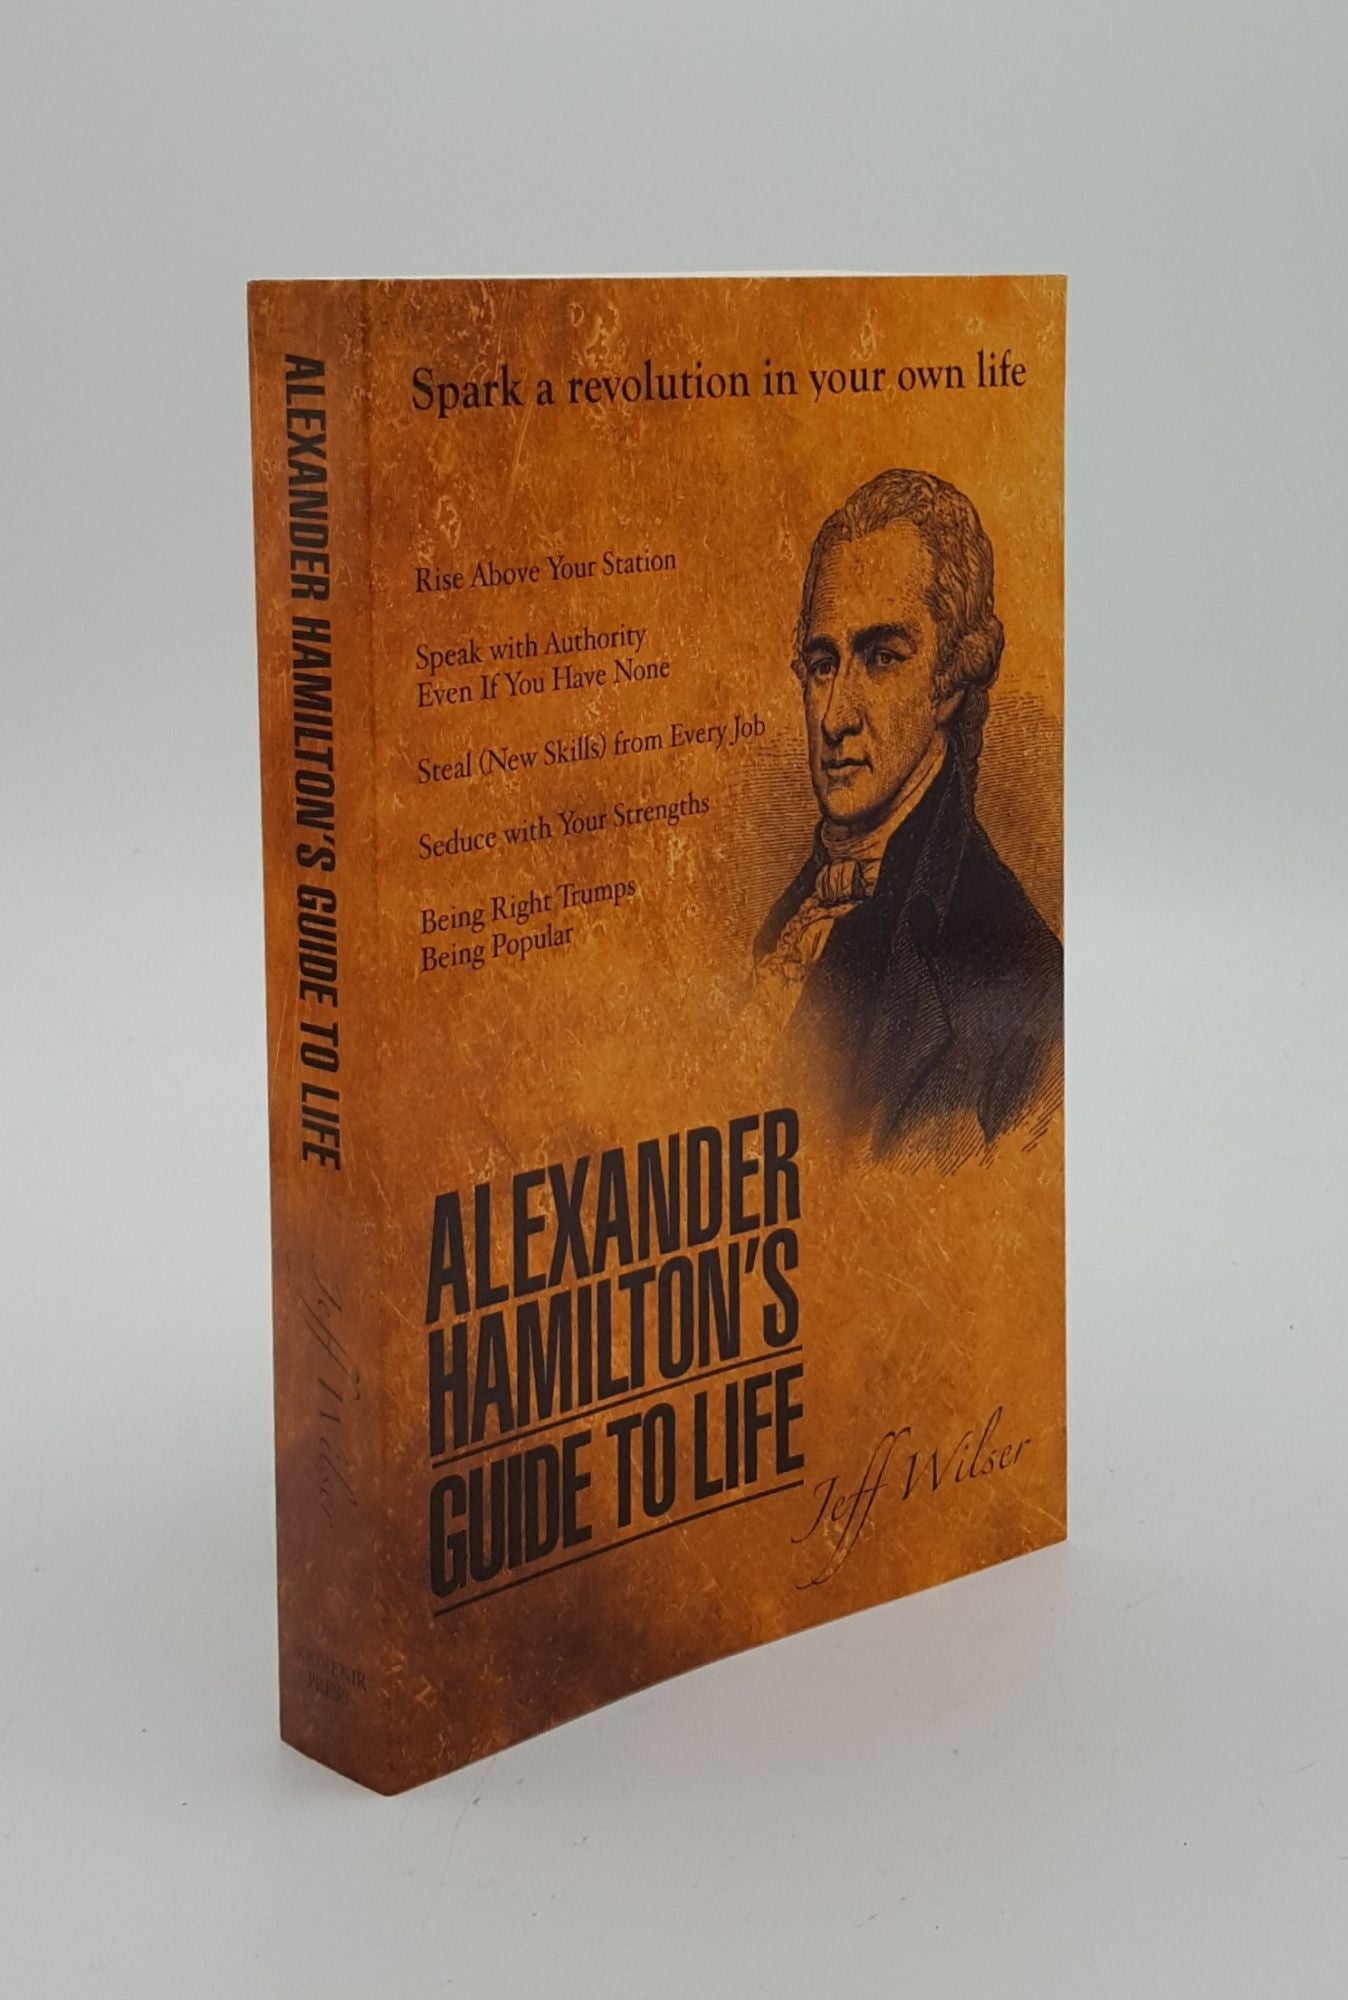 WILSER Jeff - Alexander Hamilton's Guide to Life